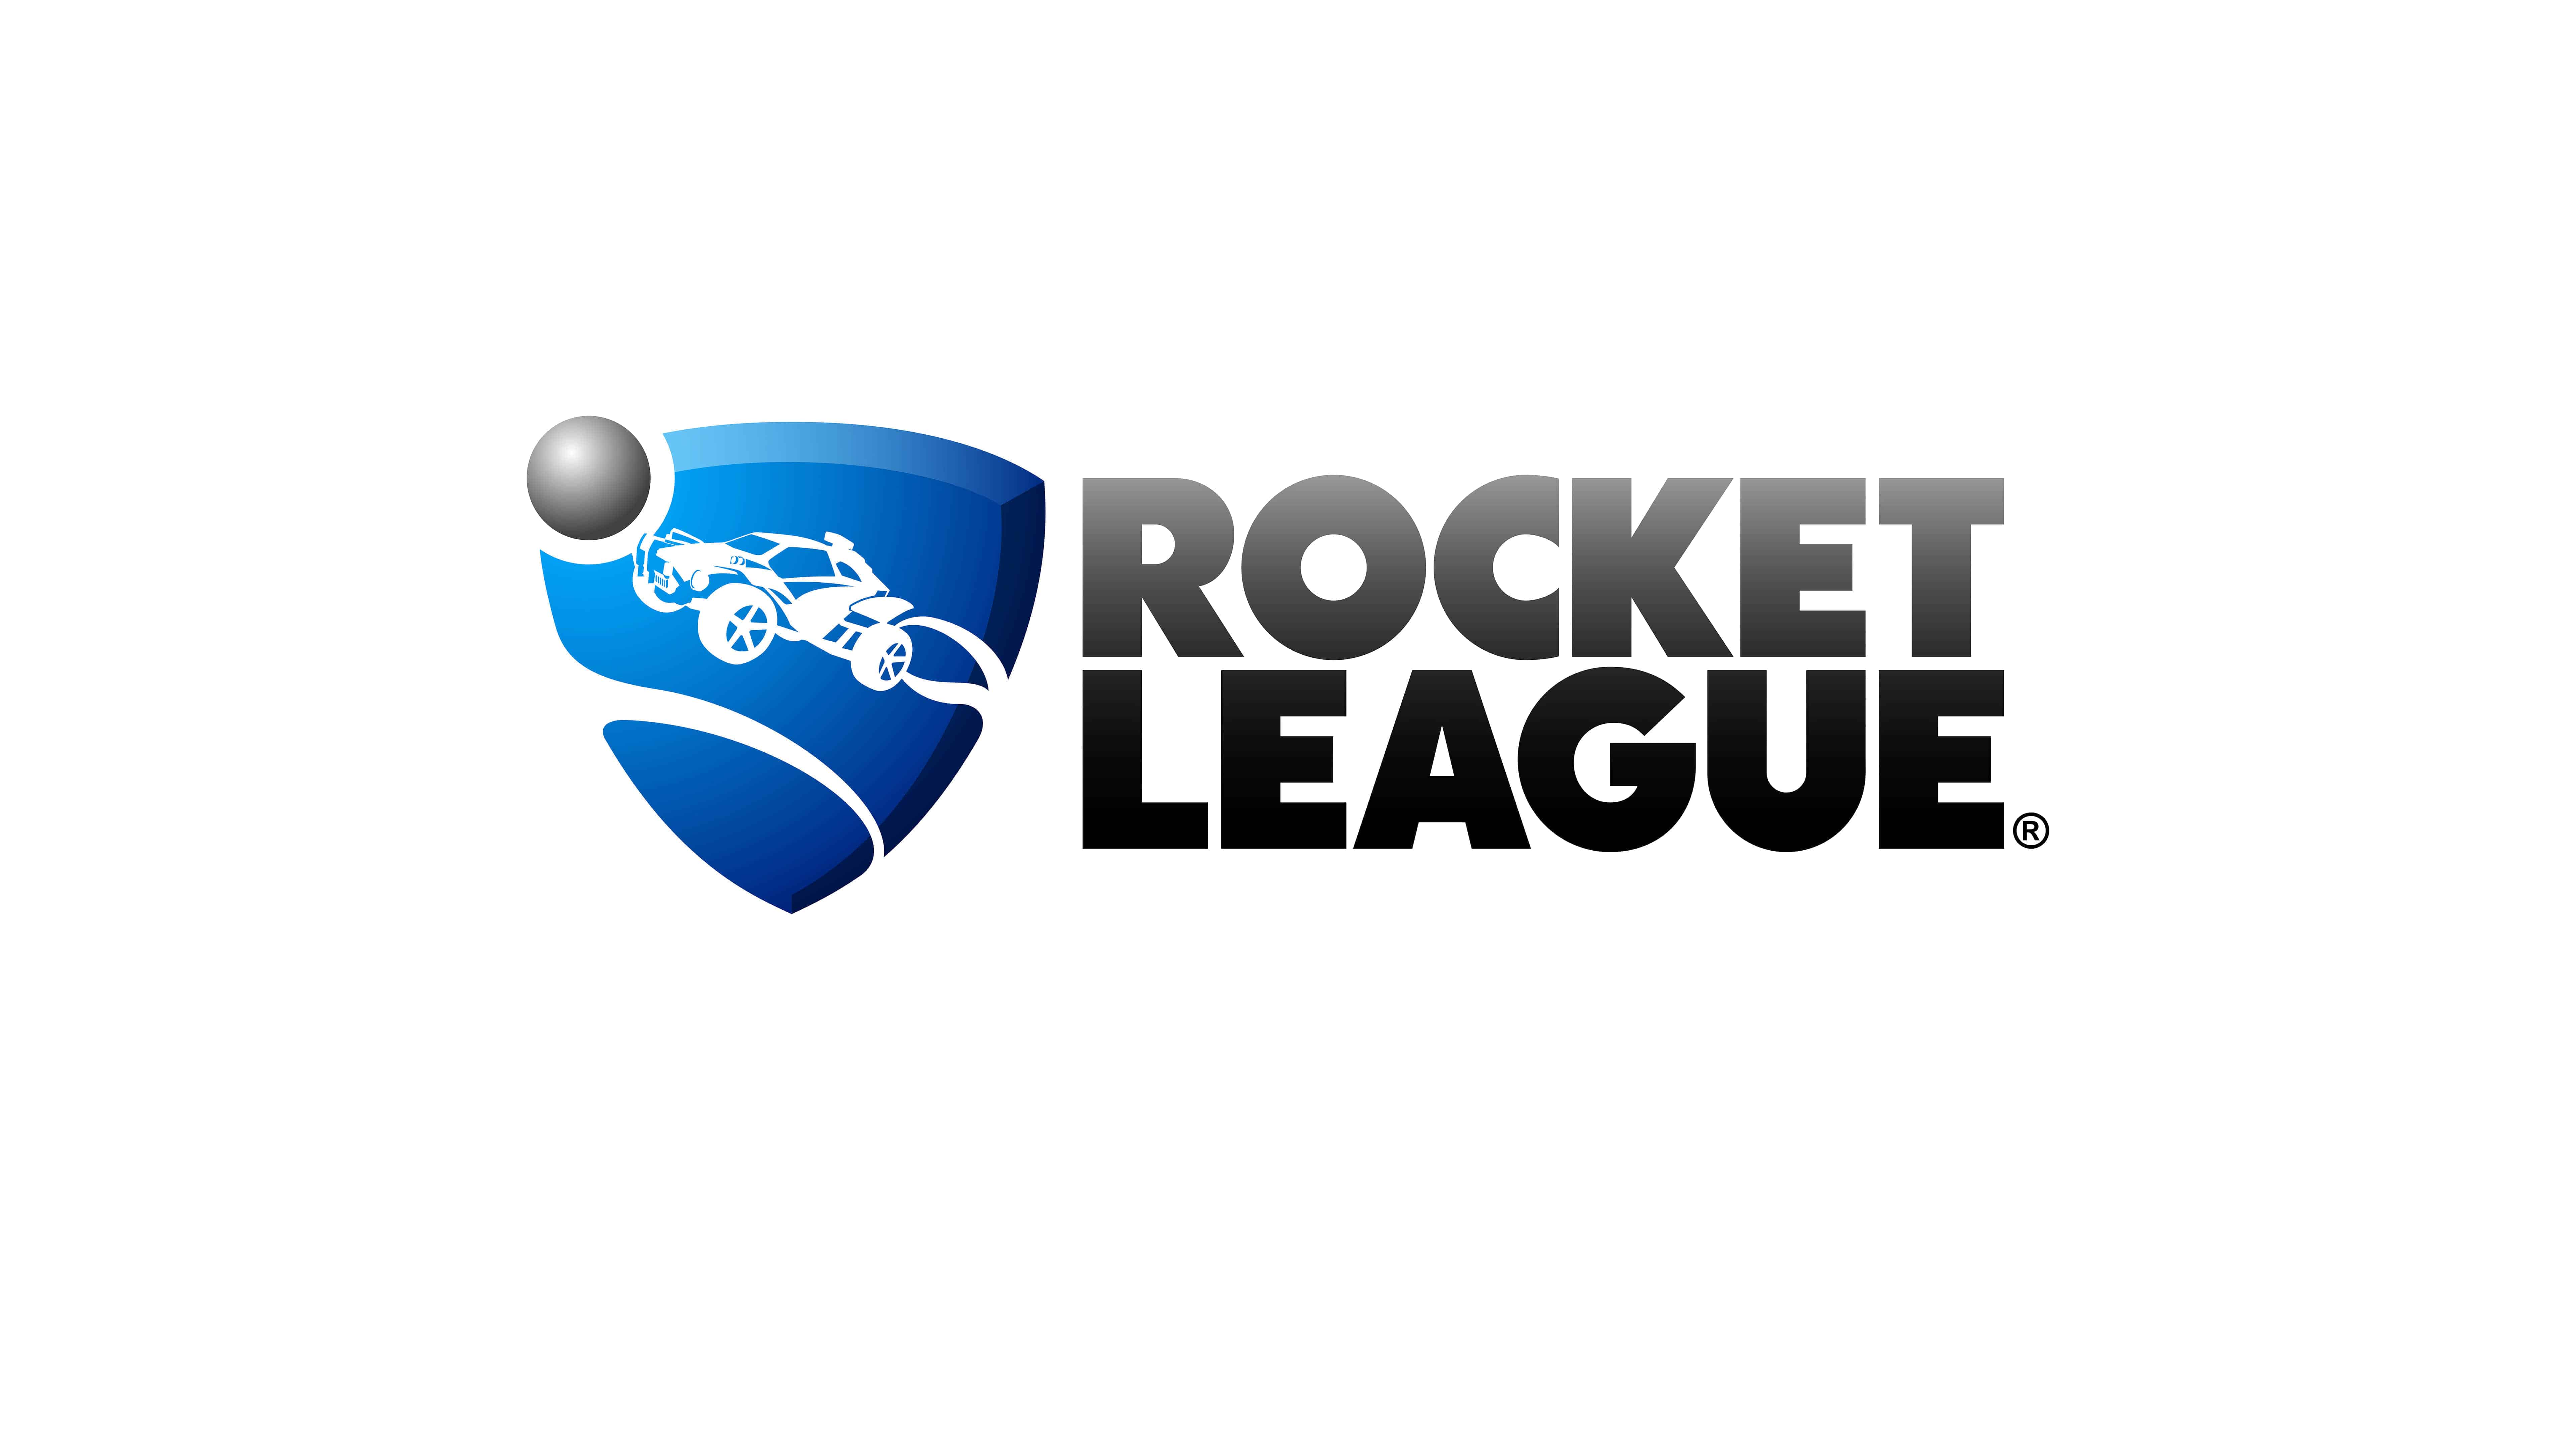 rocket league website buy items